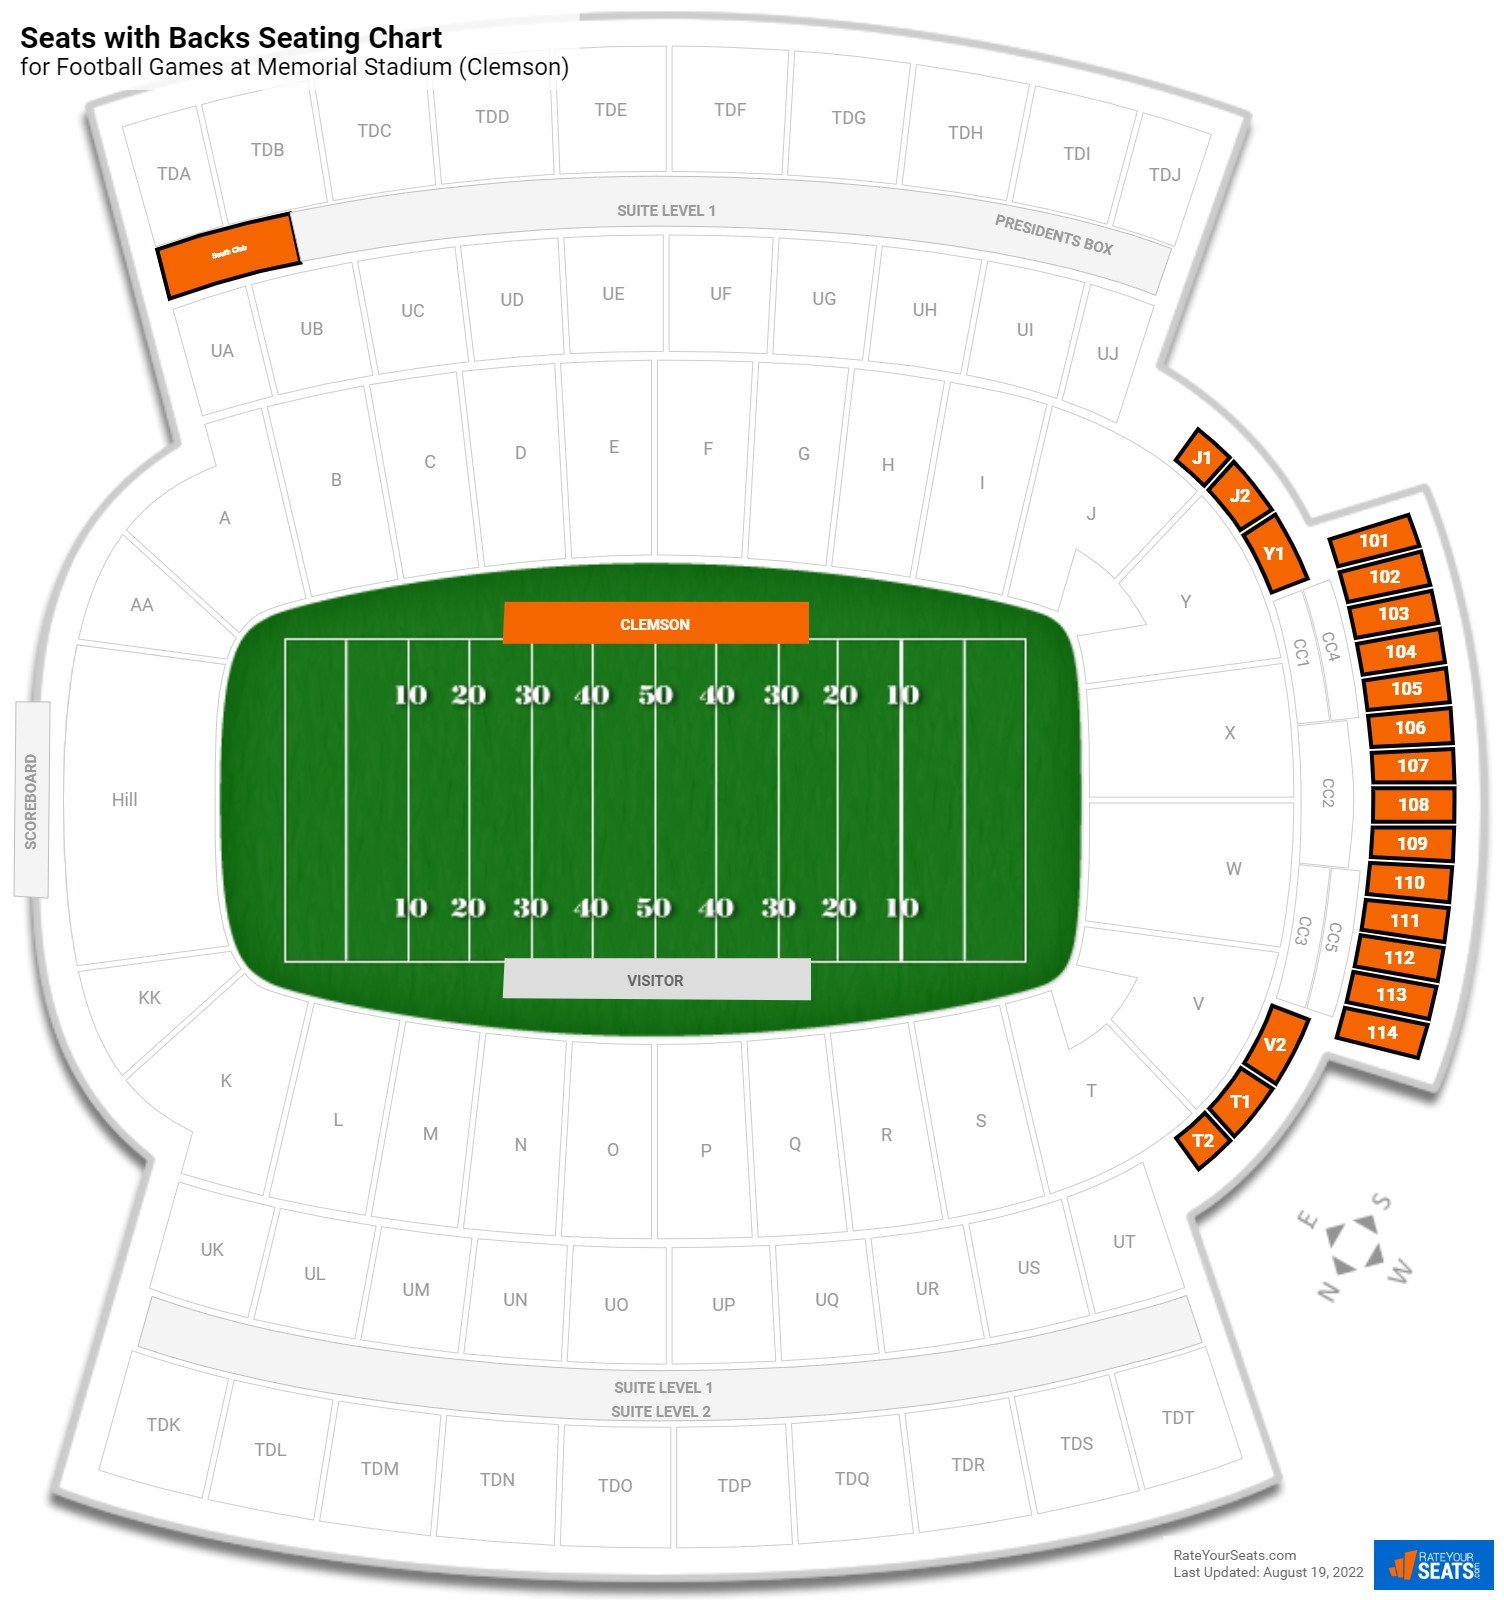 Football Seats with Backs Seating Chart at Memorial Stadium (Clemson)